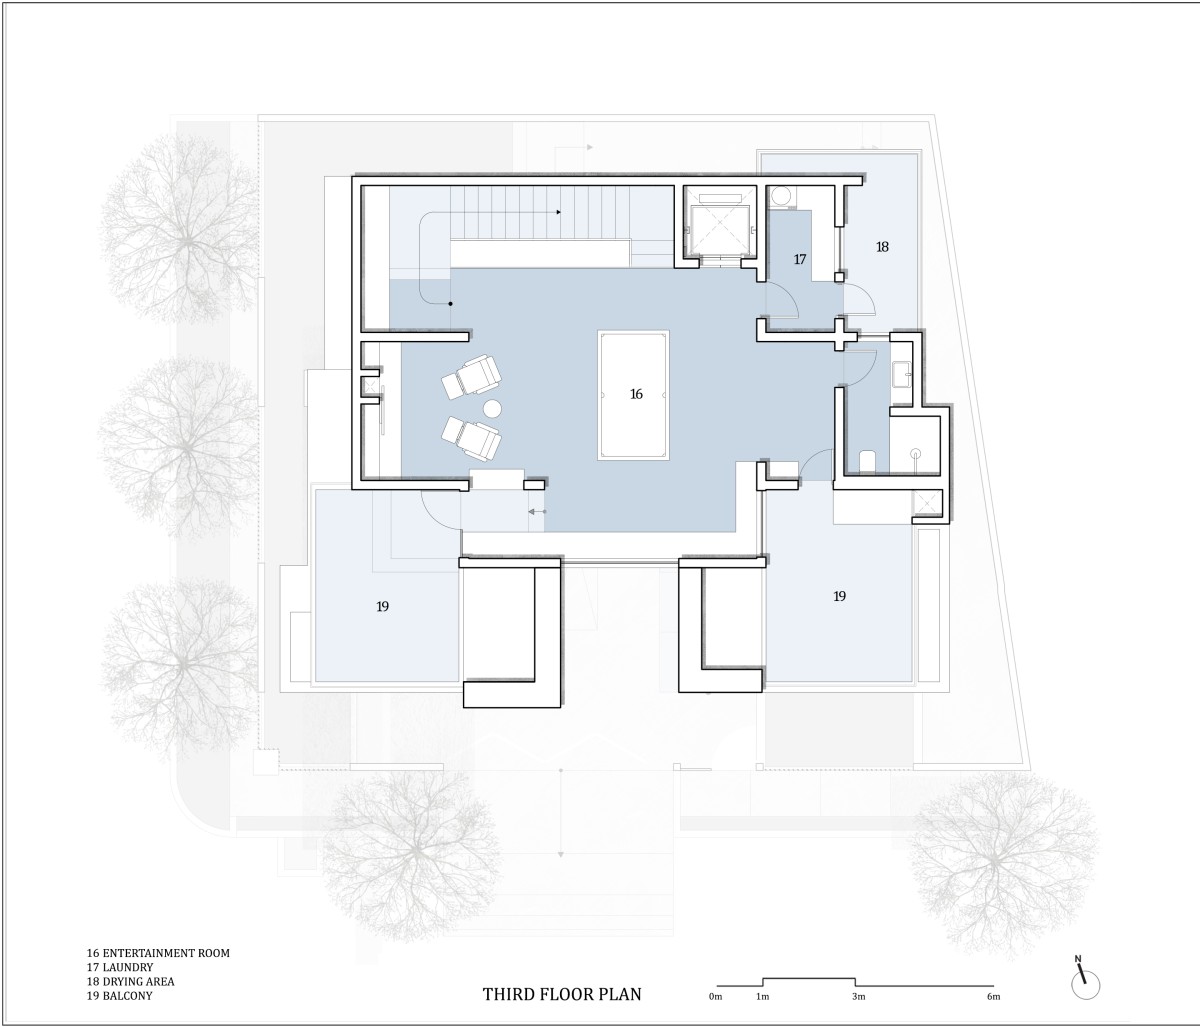 Third floor plan of RL Residence by SDeG